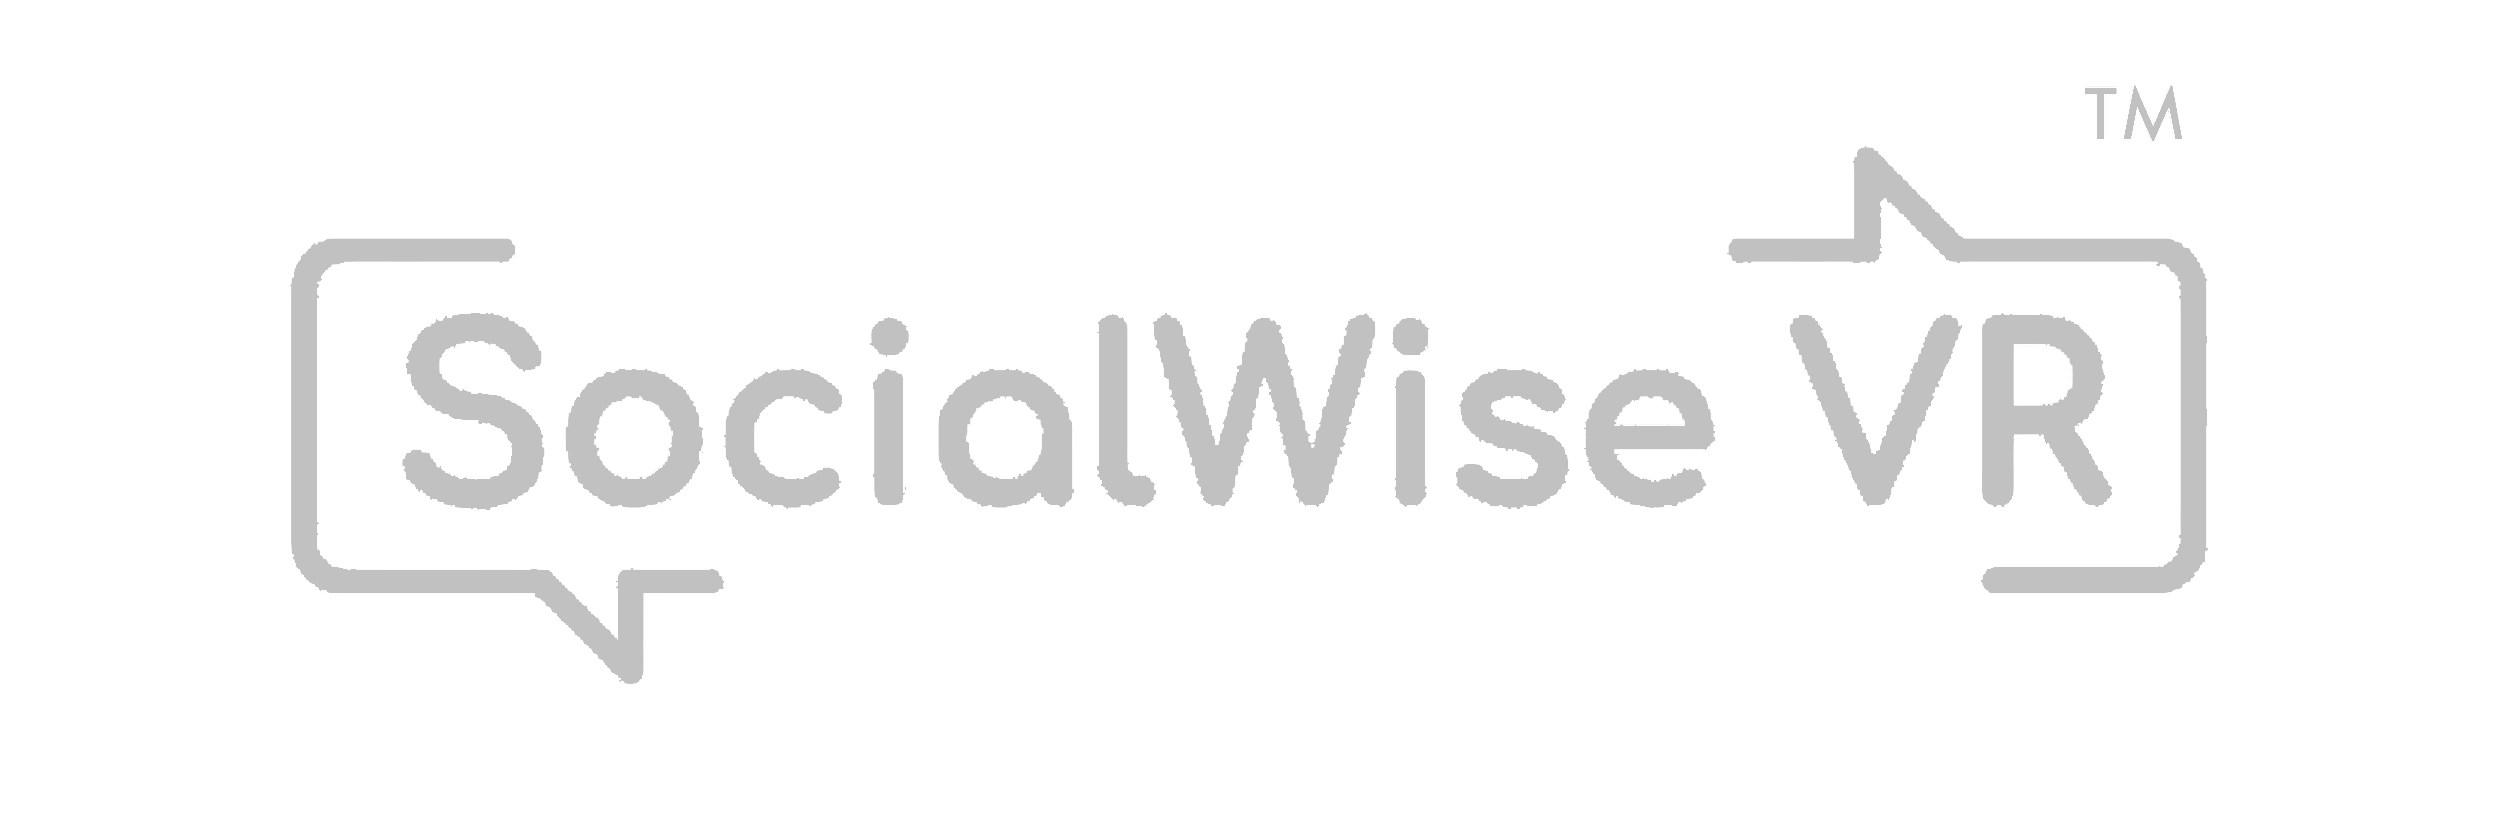 socialwisevr-logo-grey.png